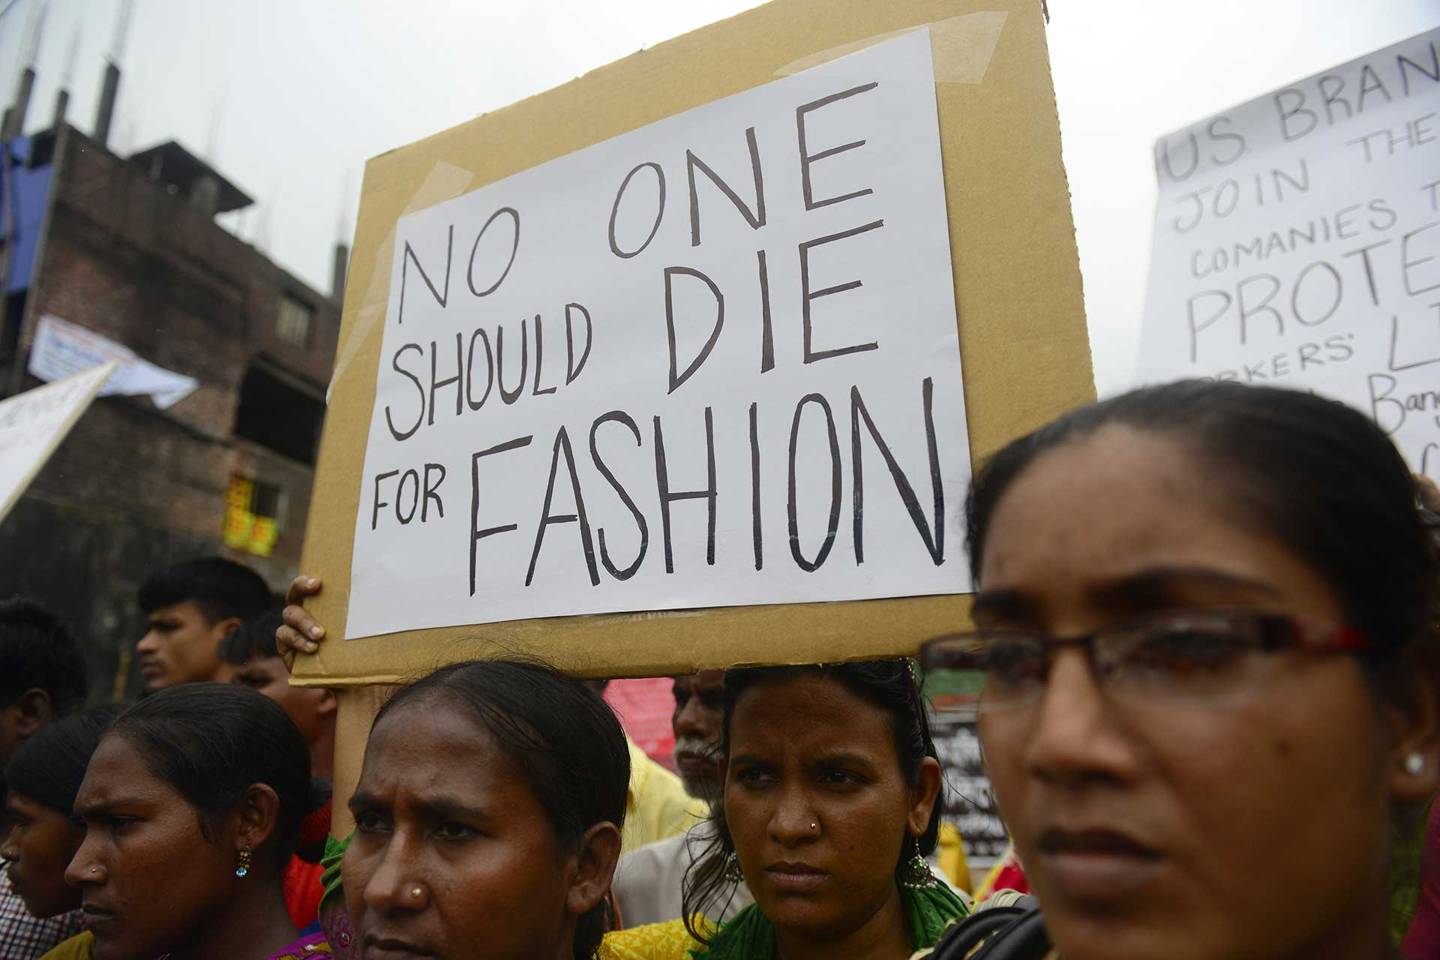 No one should die for fashion | Fashion revolution | Rana Plaza Collapse